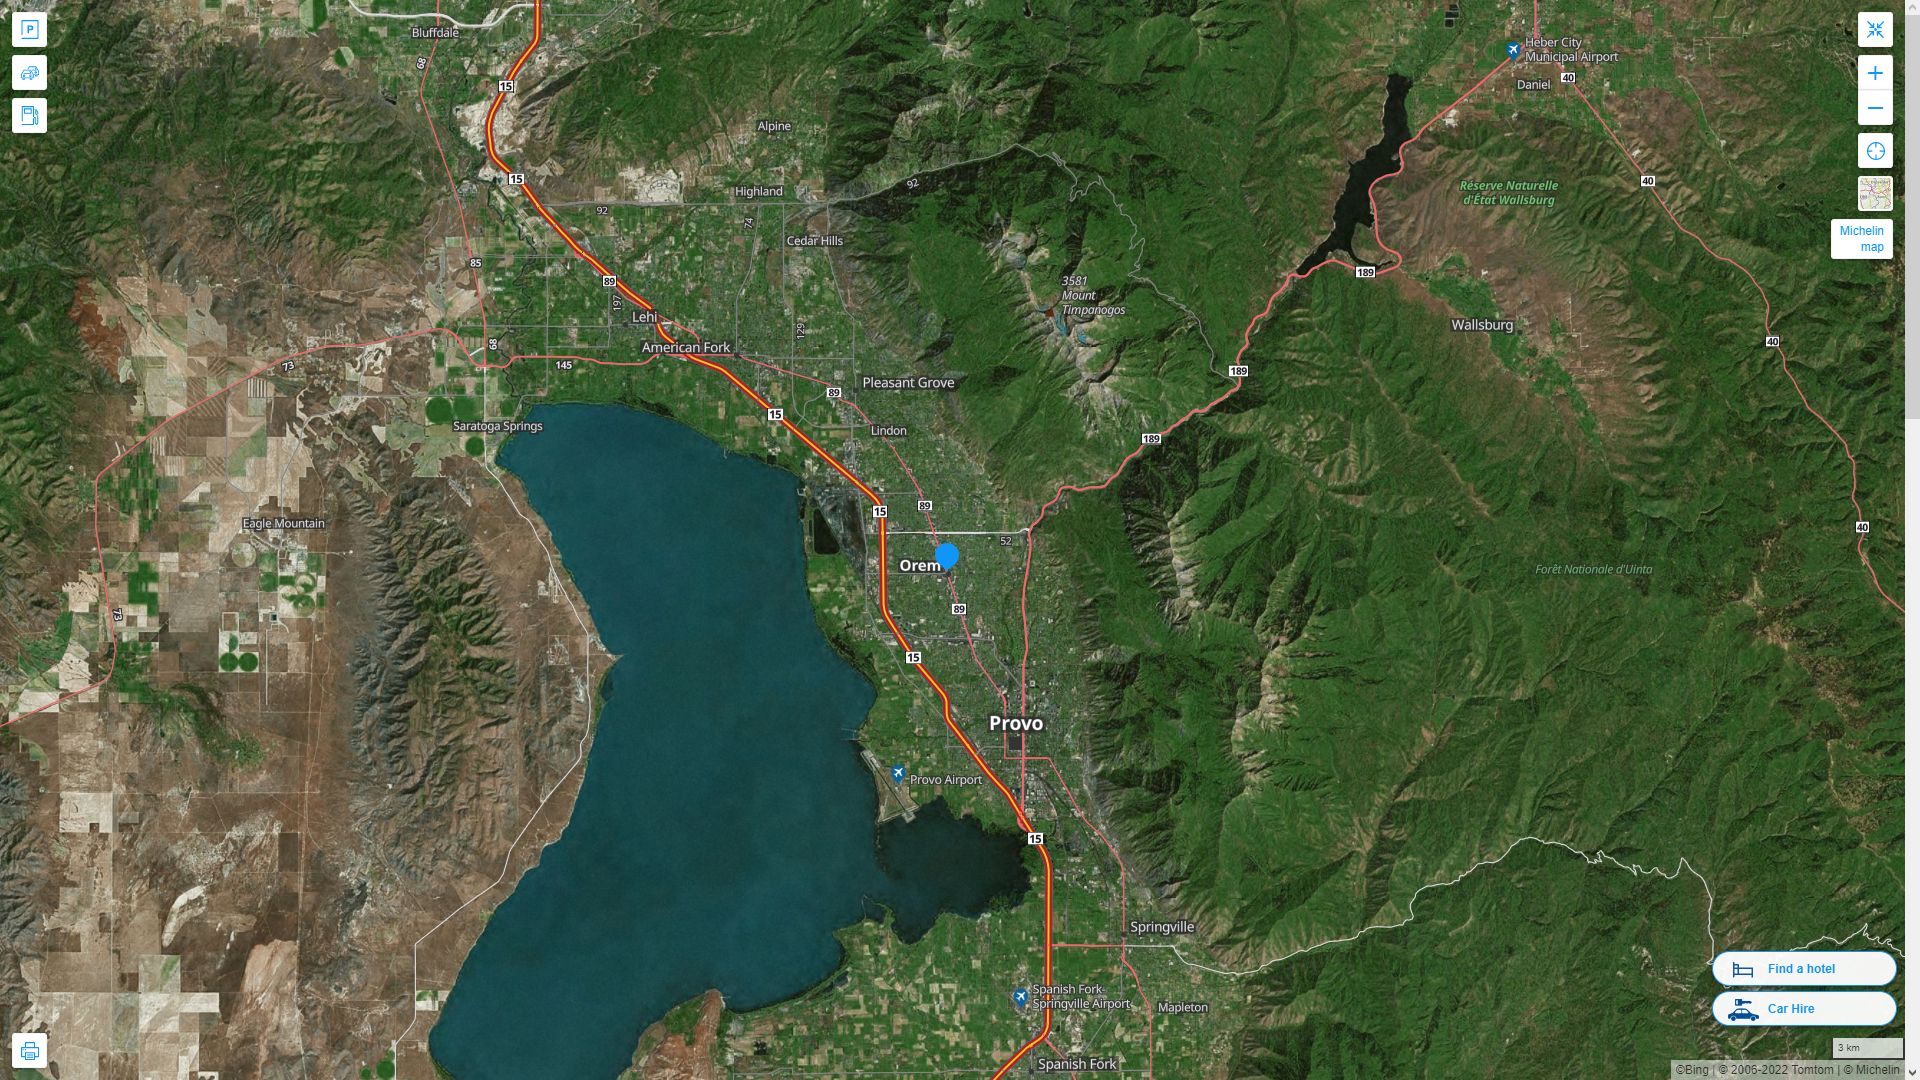 Orem Utah Highway and Road Map with Satellite View